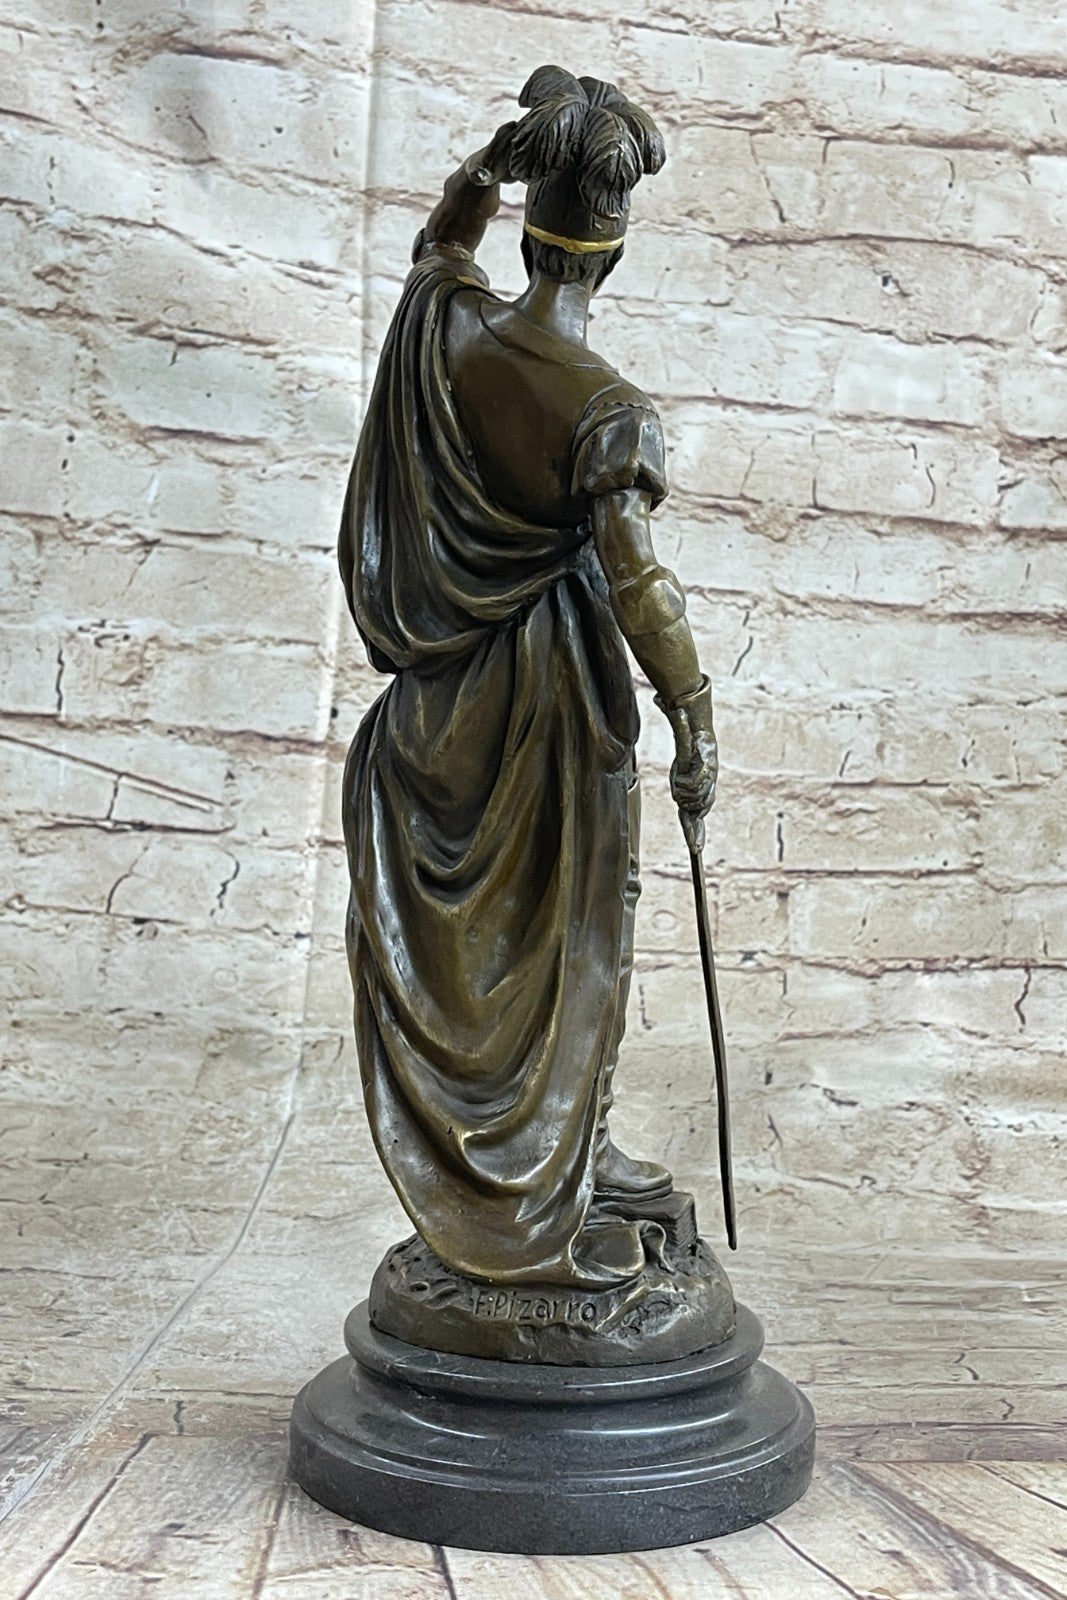 Art Decor Classic Roman Greek Warrior Bronze Sculpture Gold Accent Patina